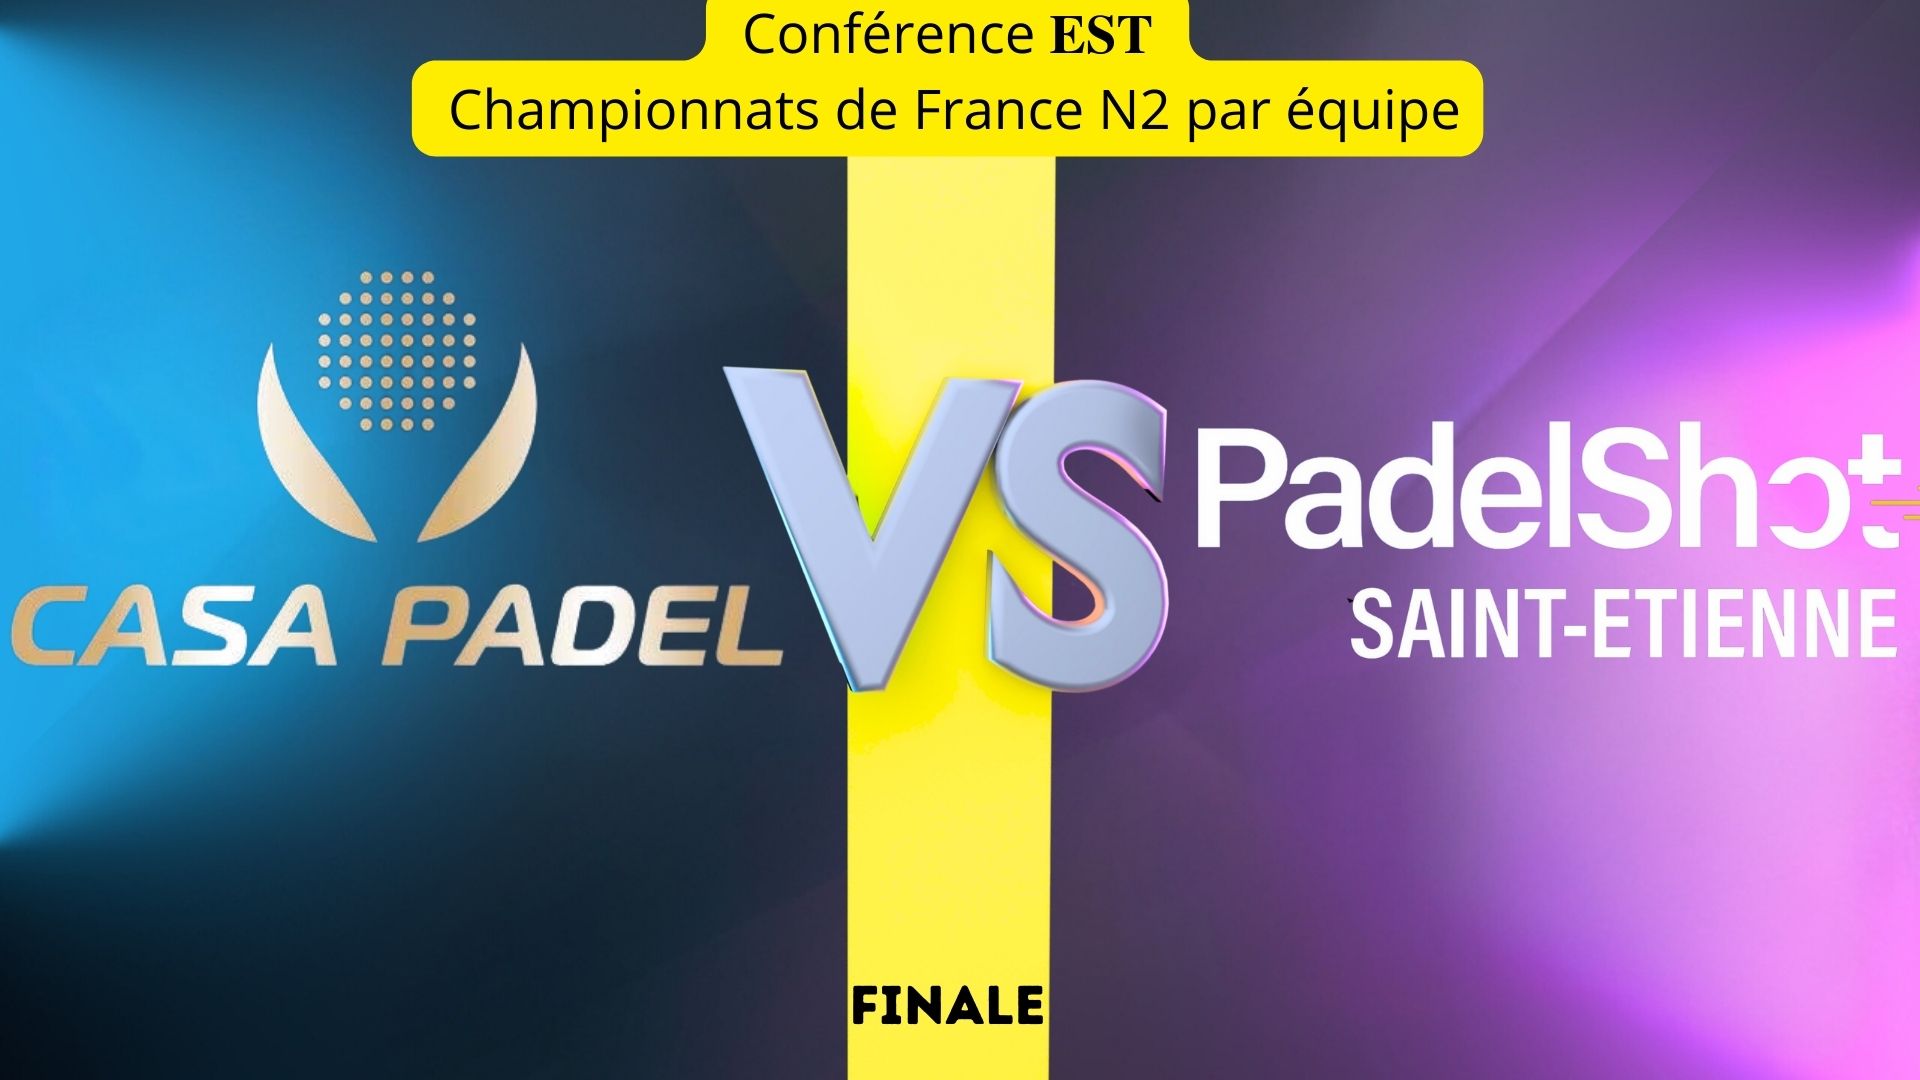 Koti Padel Padel Shot Saint Etienne -konferenssi on klubienvälinen